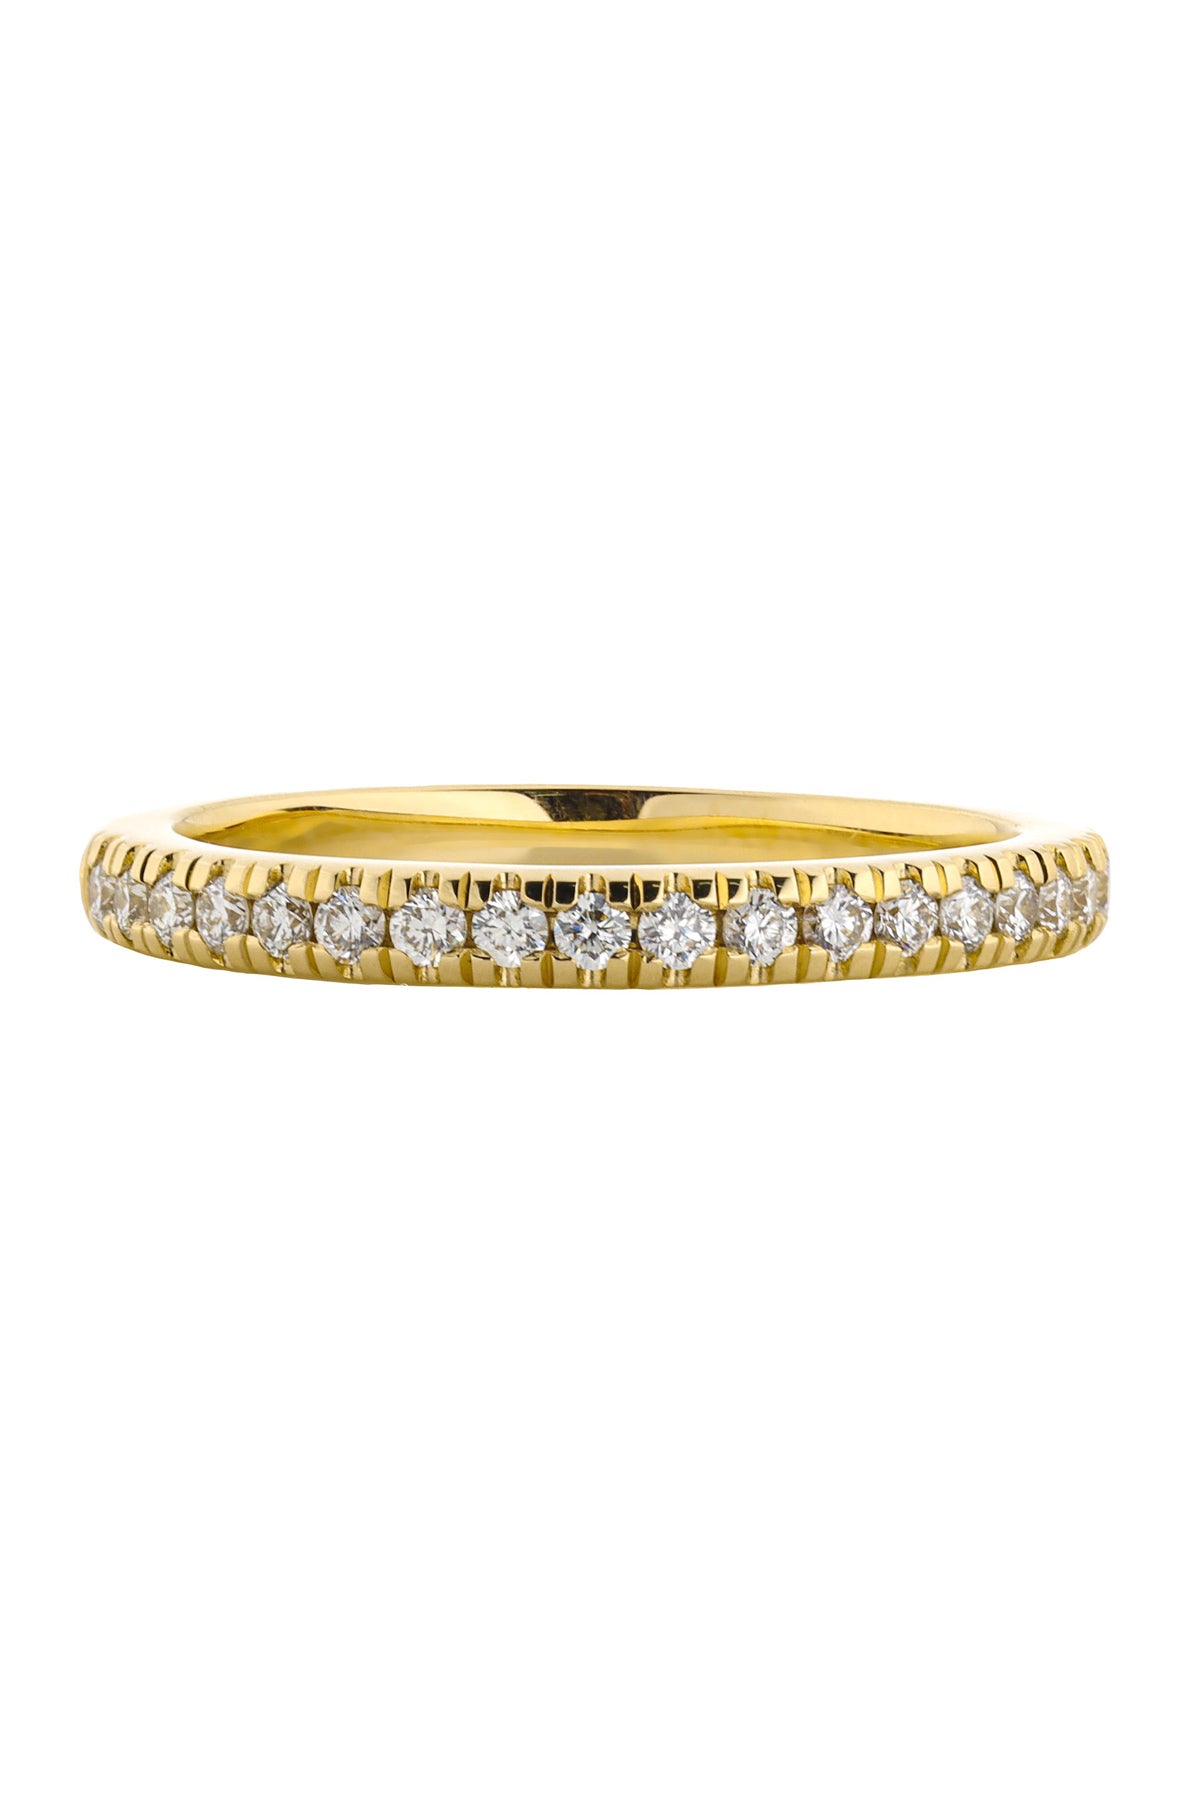 18 carat Yellow Gold Fine Claw Diamond Band available at LeGassick Diamonds and Jewellery Gold Coast, Australia.